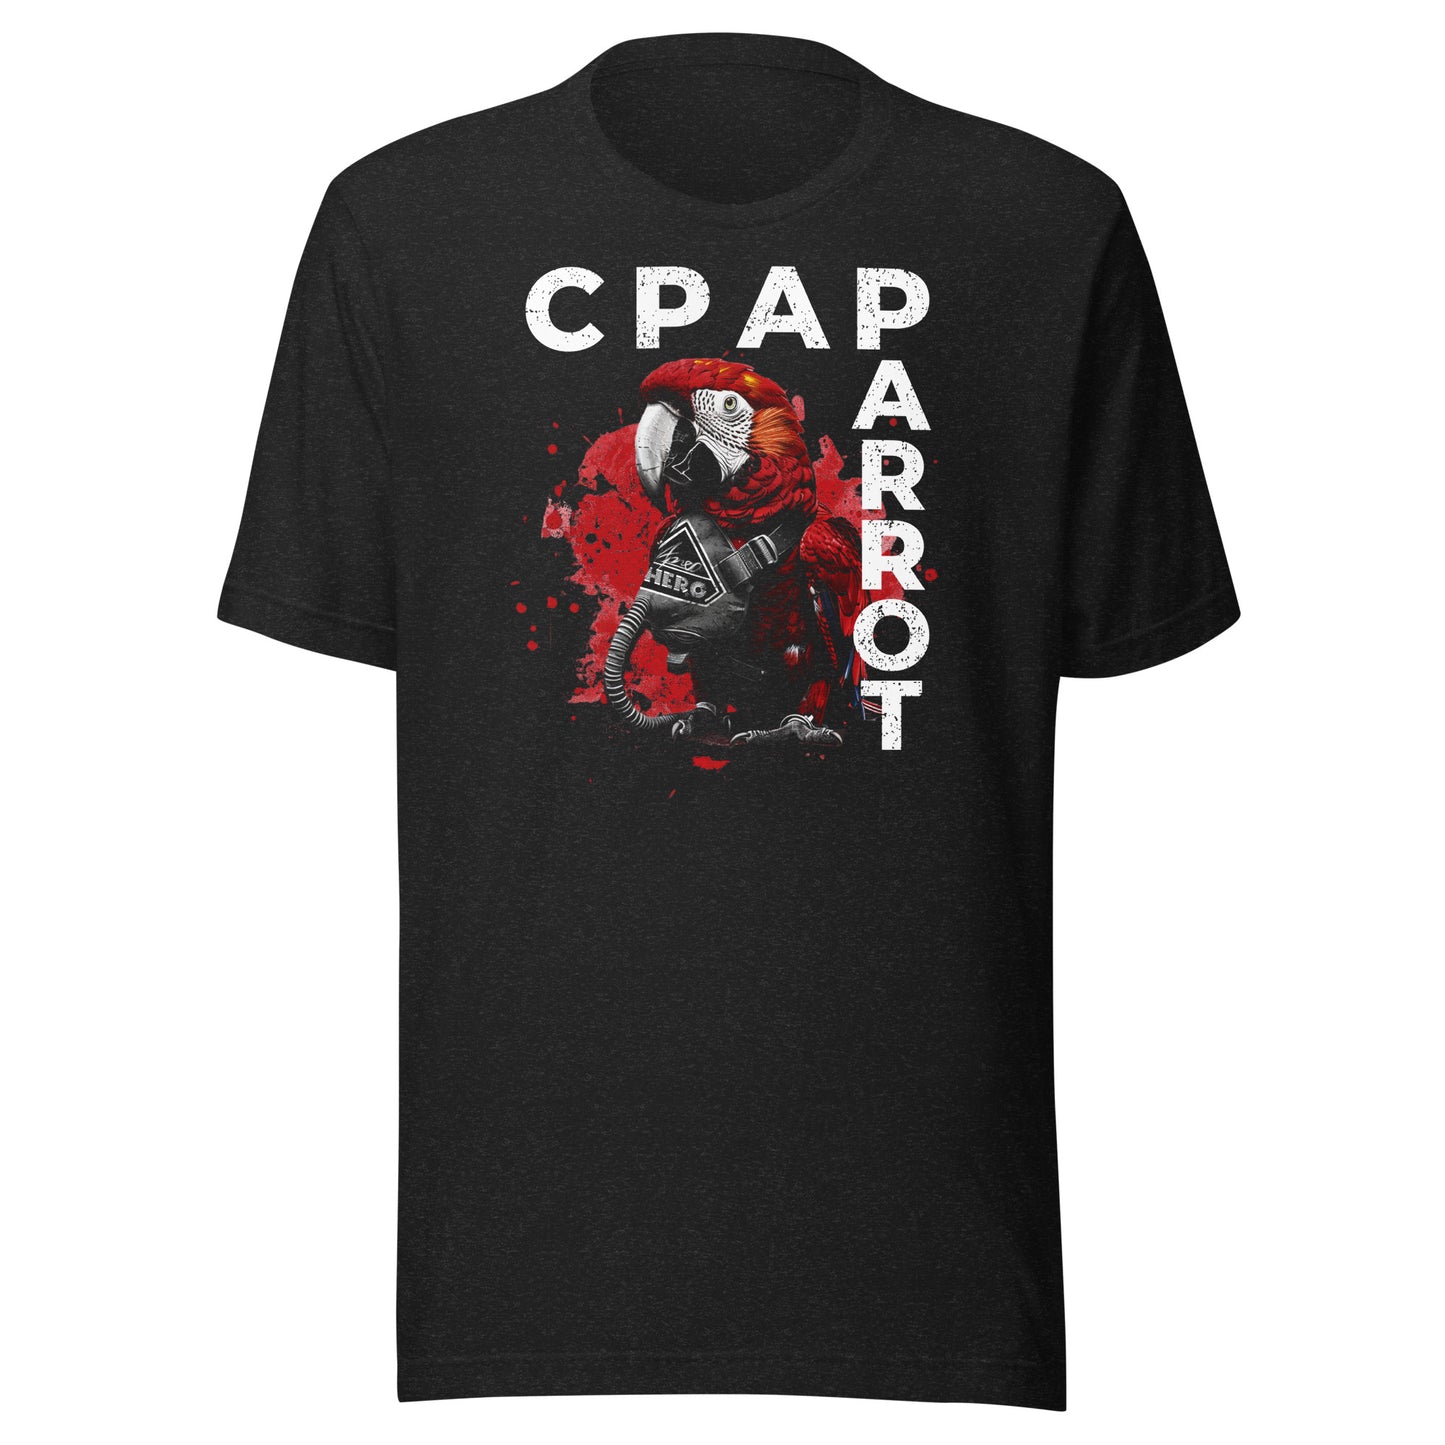 CPAParrot, Parrot Wearing a CPAP, CPAP, Animals, Sleep Apnea, Graphic Tee Shirt, Black